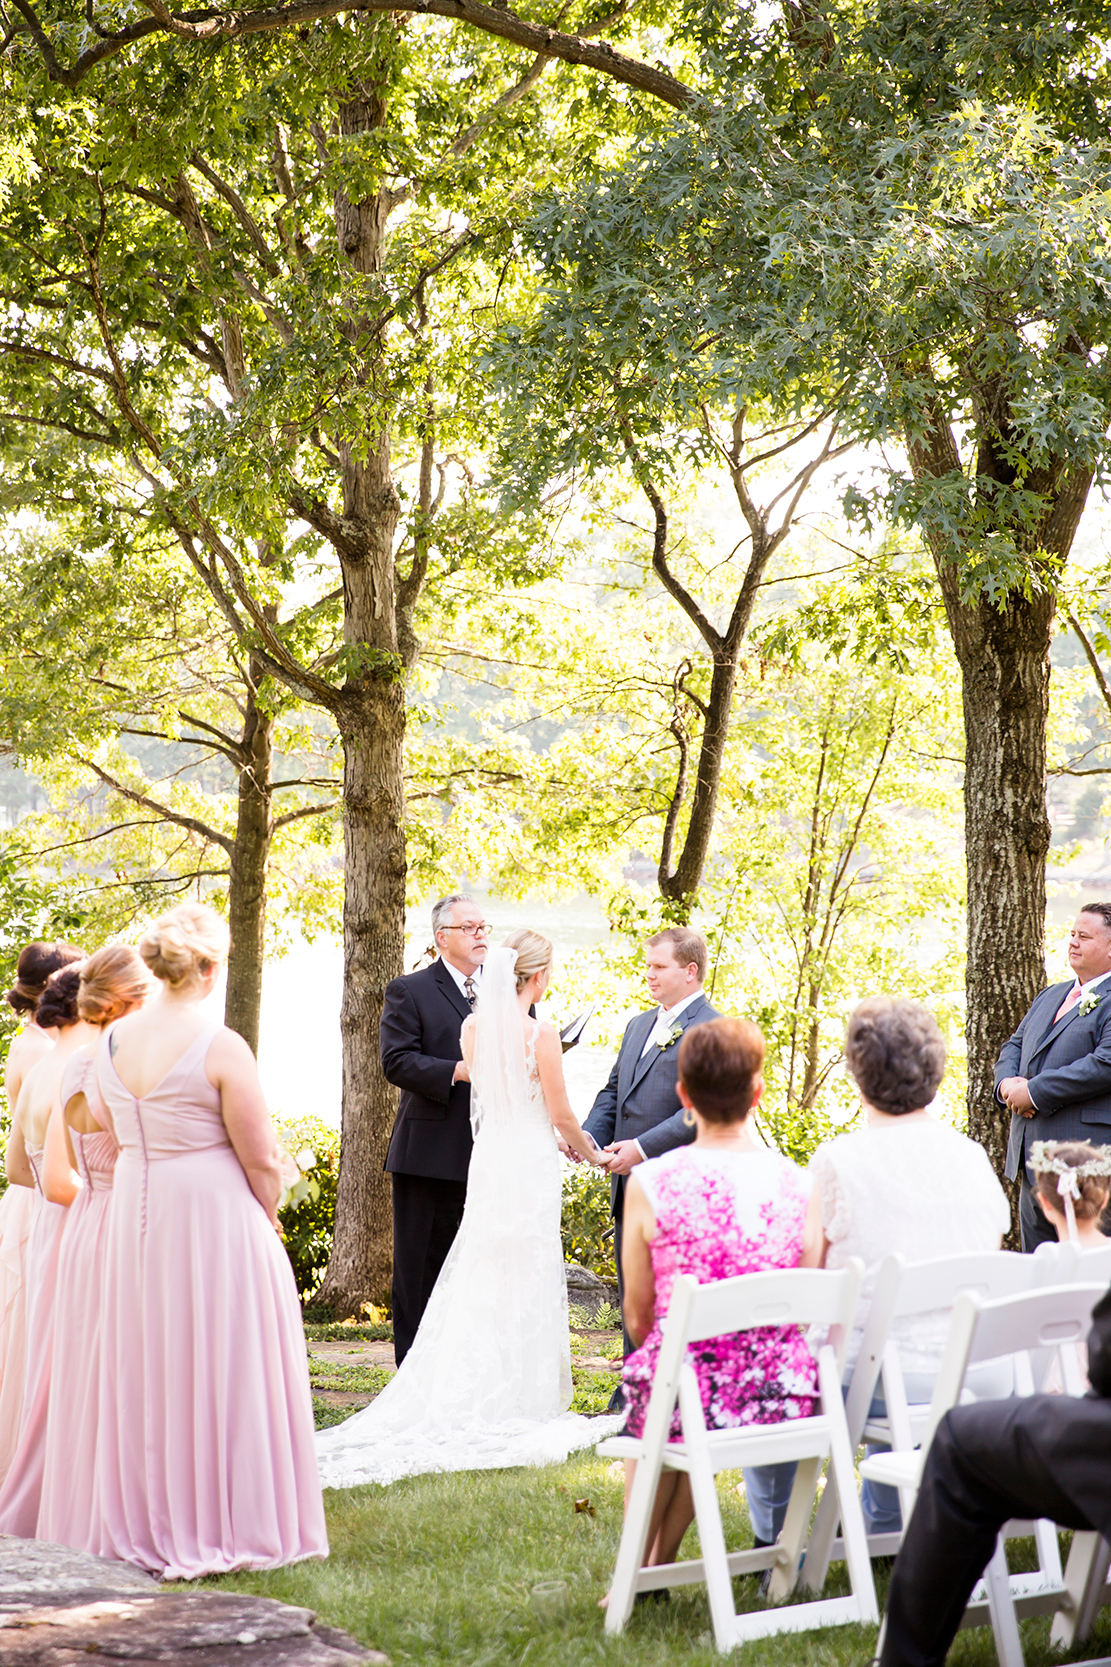 Ryan  Jordans Wedding at Smith Mountain Lake - Image Property of www.j-dphoto.com